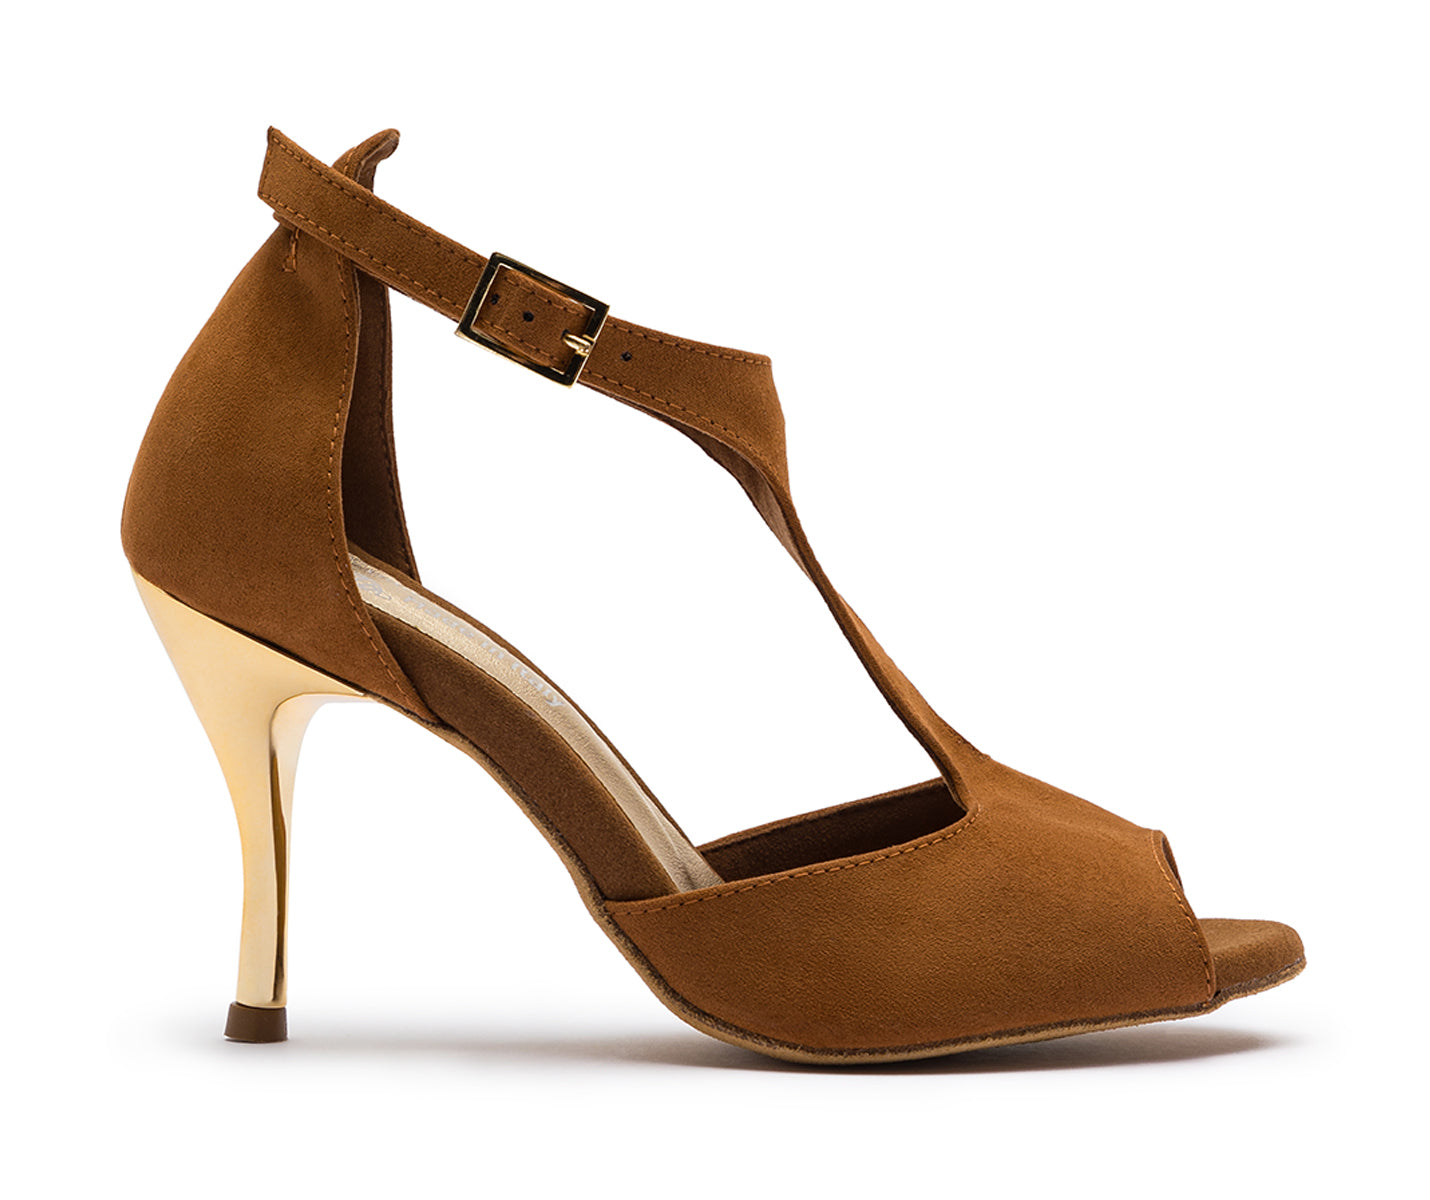 DQ1001 zapatos de baile en marrón con suela de gamuza